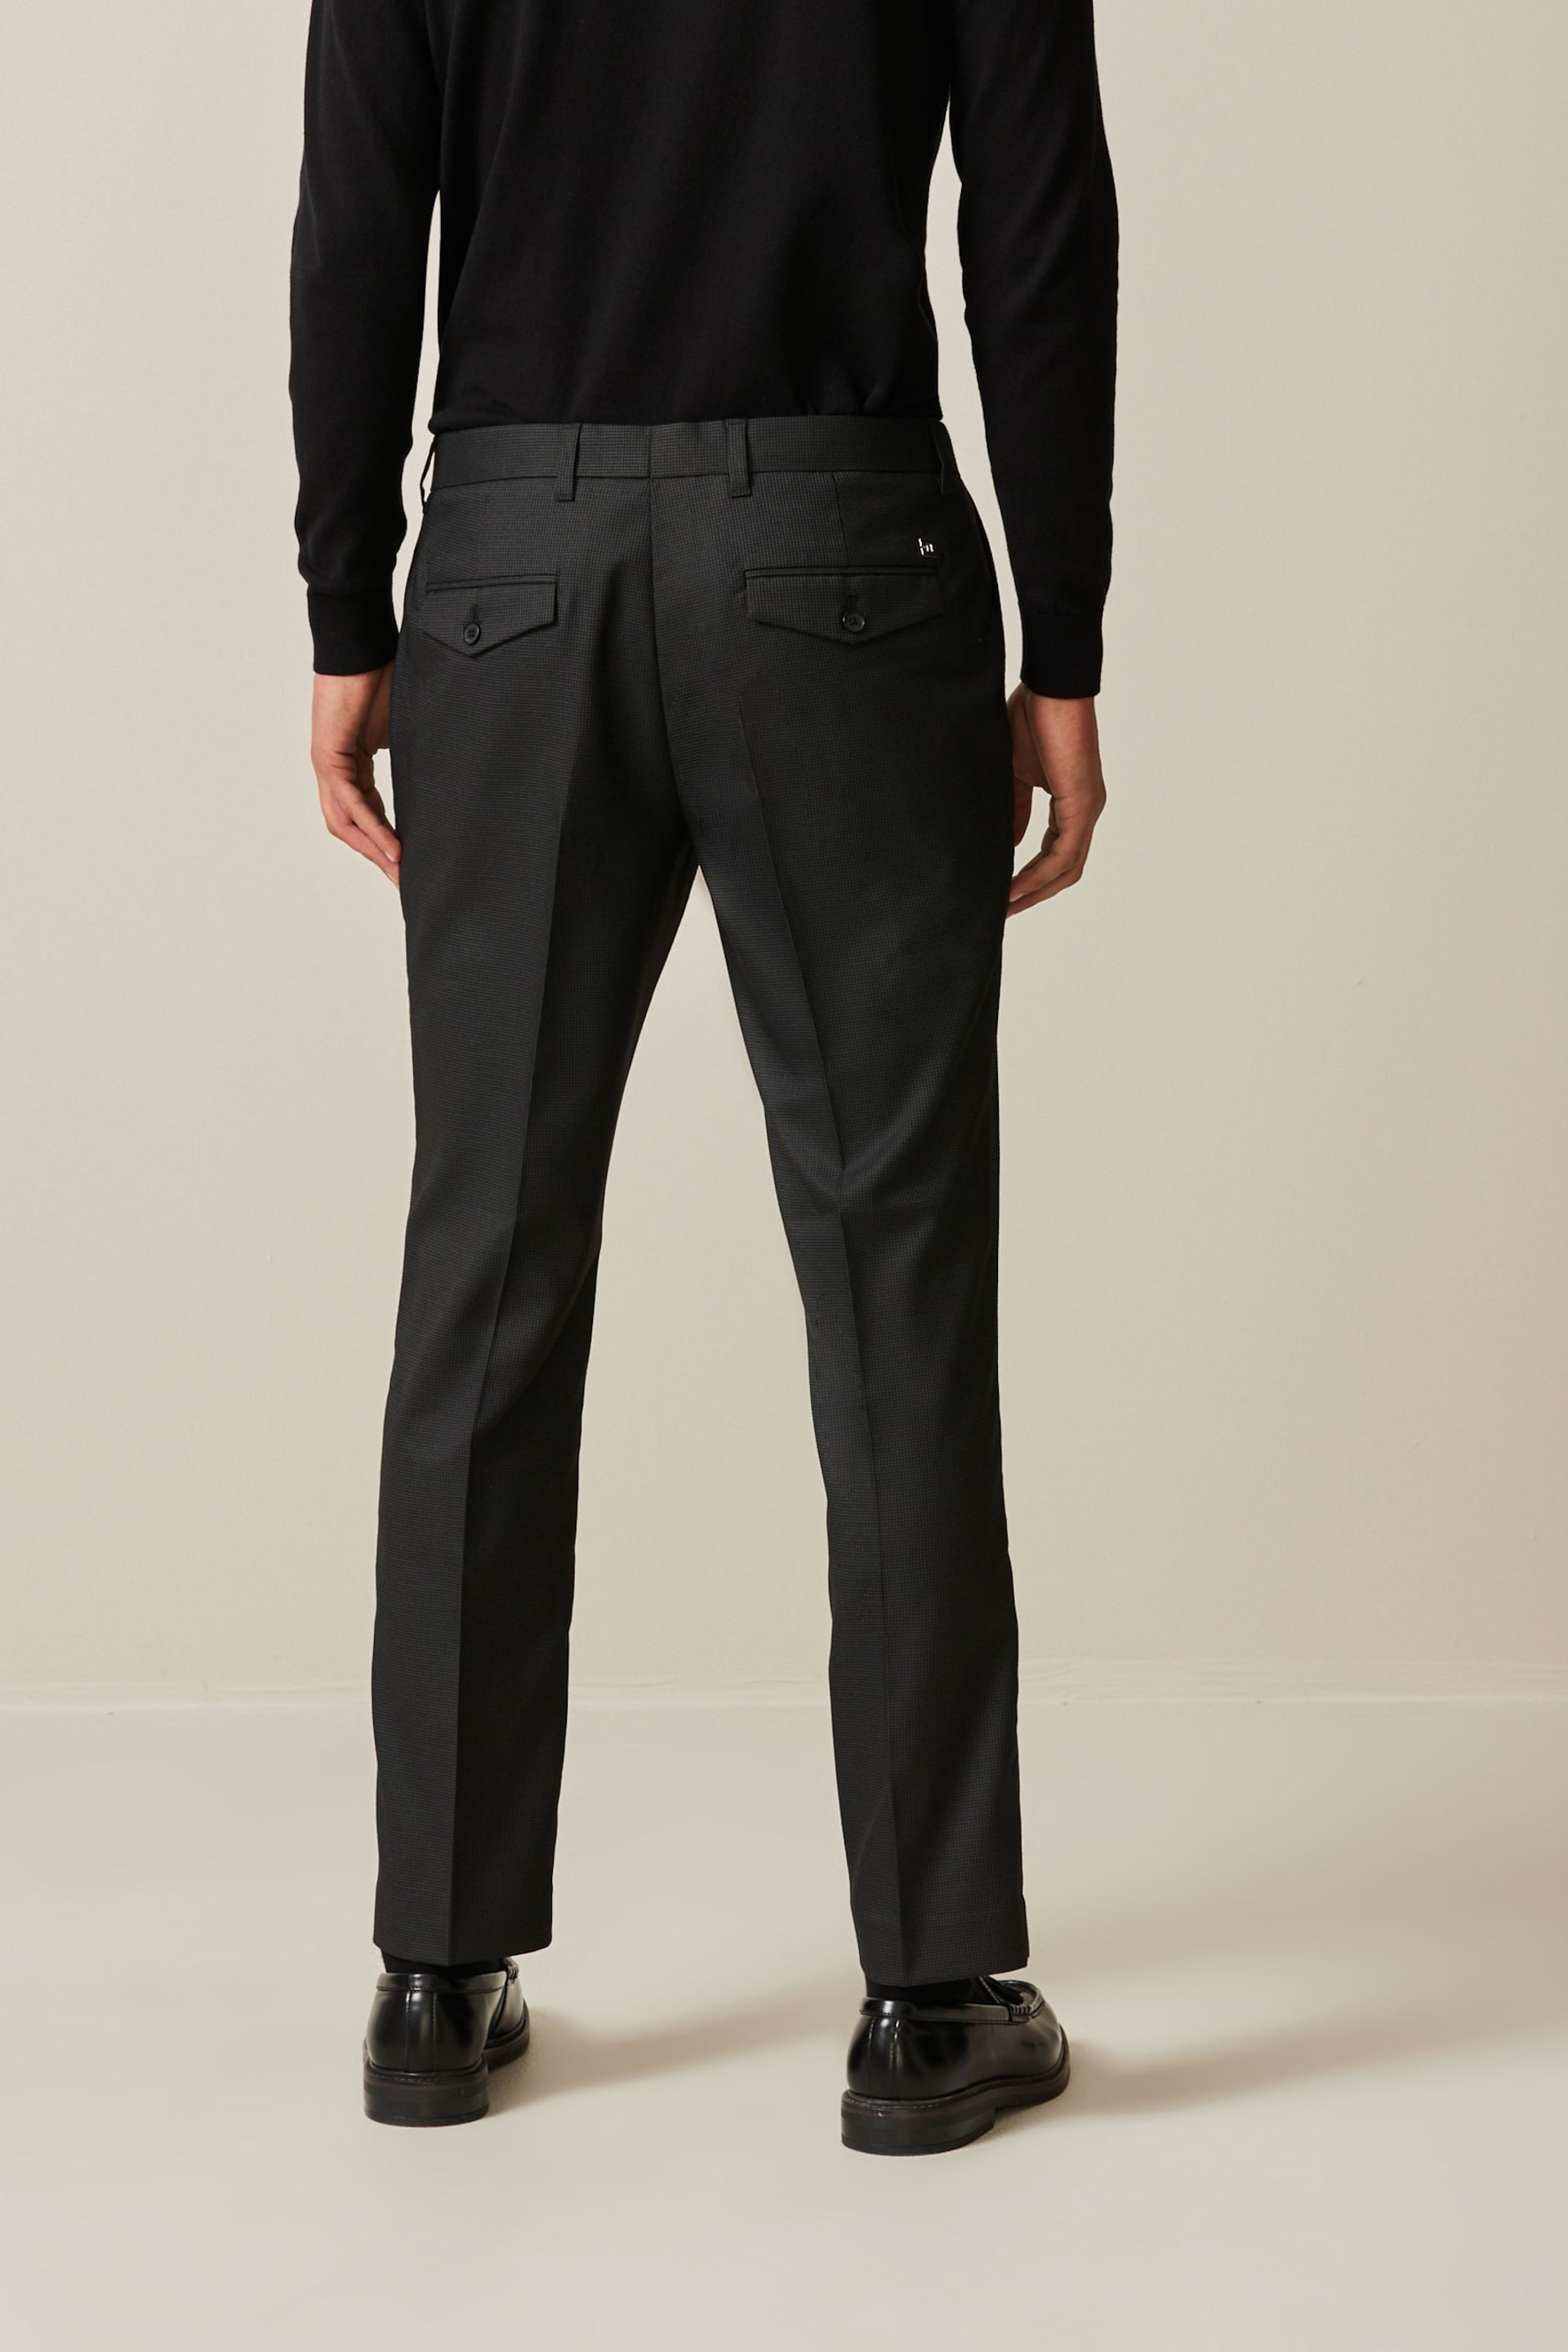 Black Slim Textured Smart Trousers - Image 11 of 11